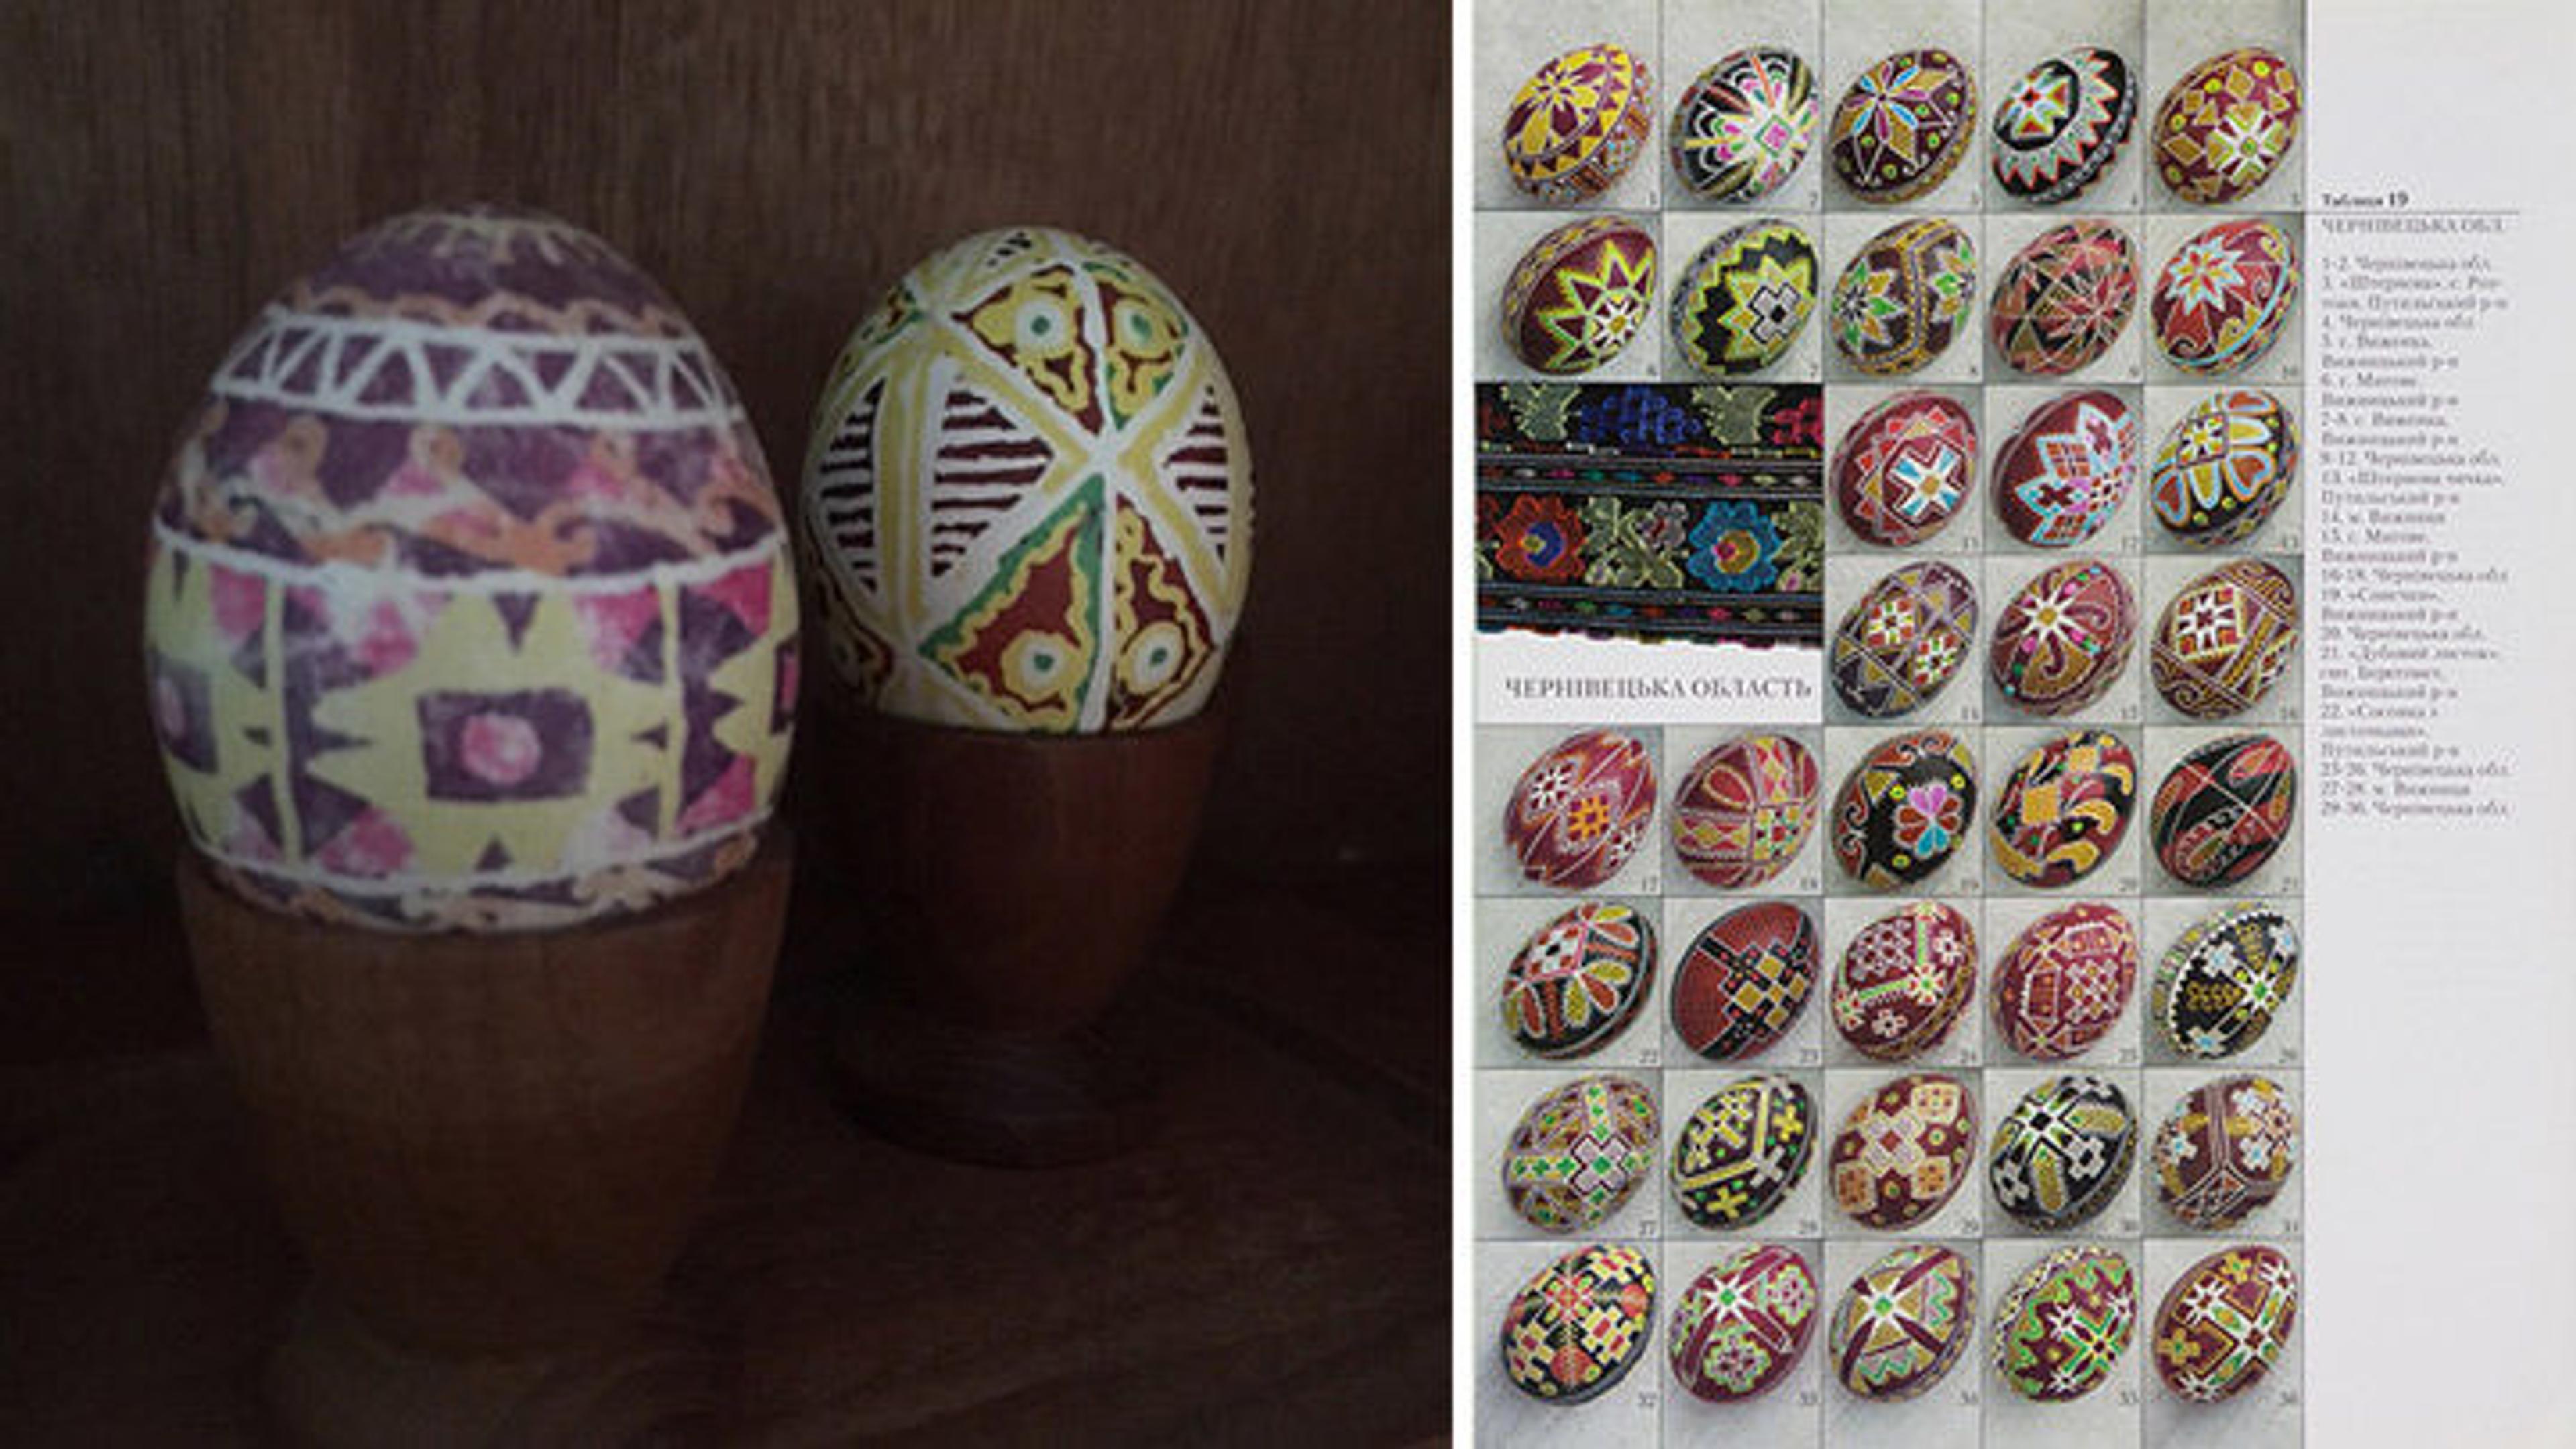 Ukranian eggs